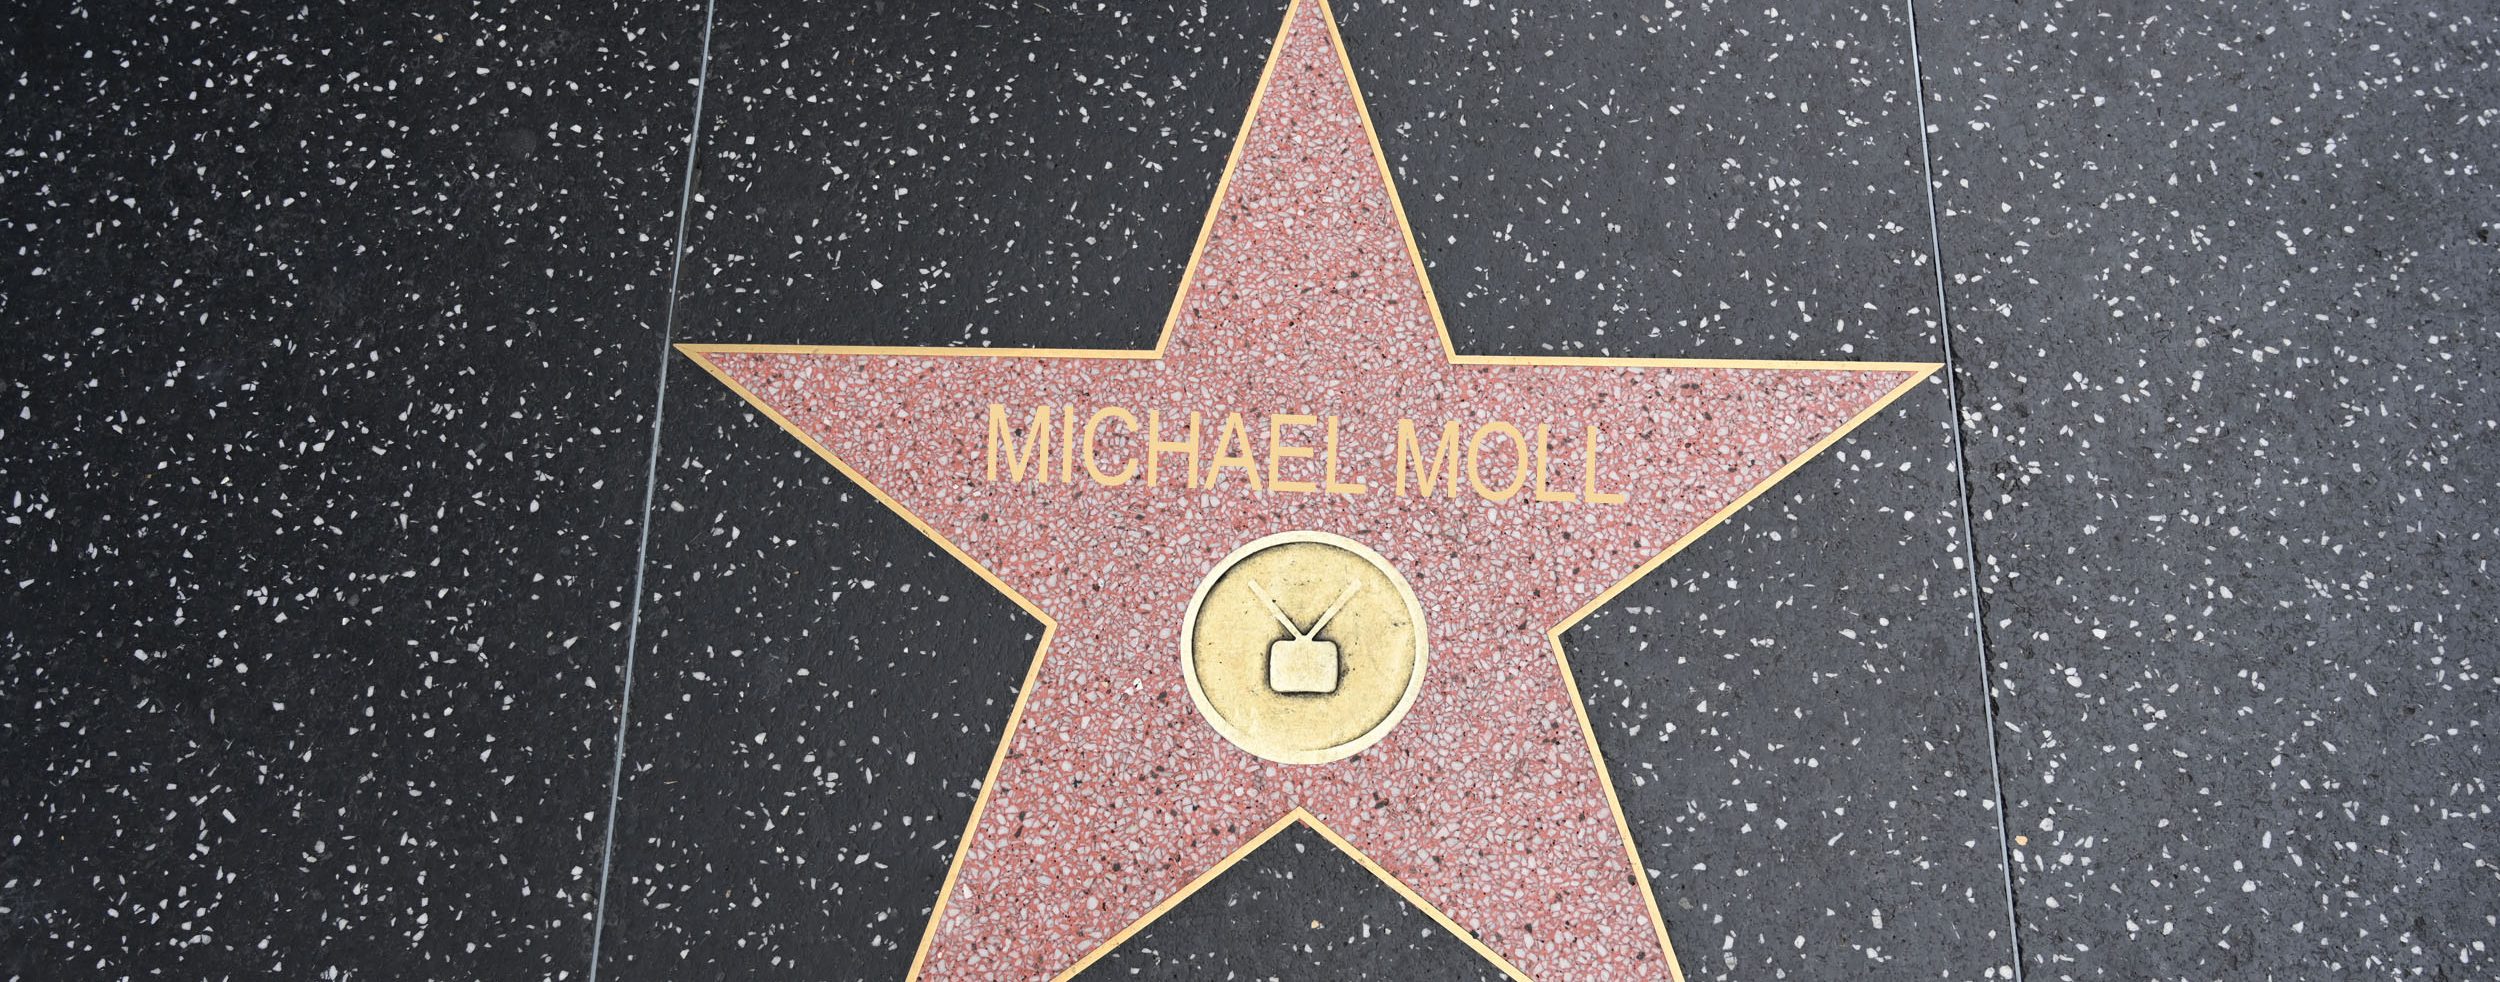 Michael Moll auf dem Walk of Fame